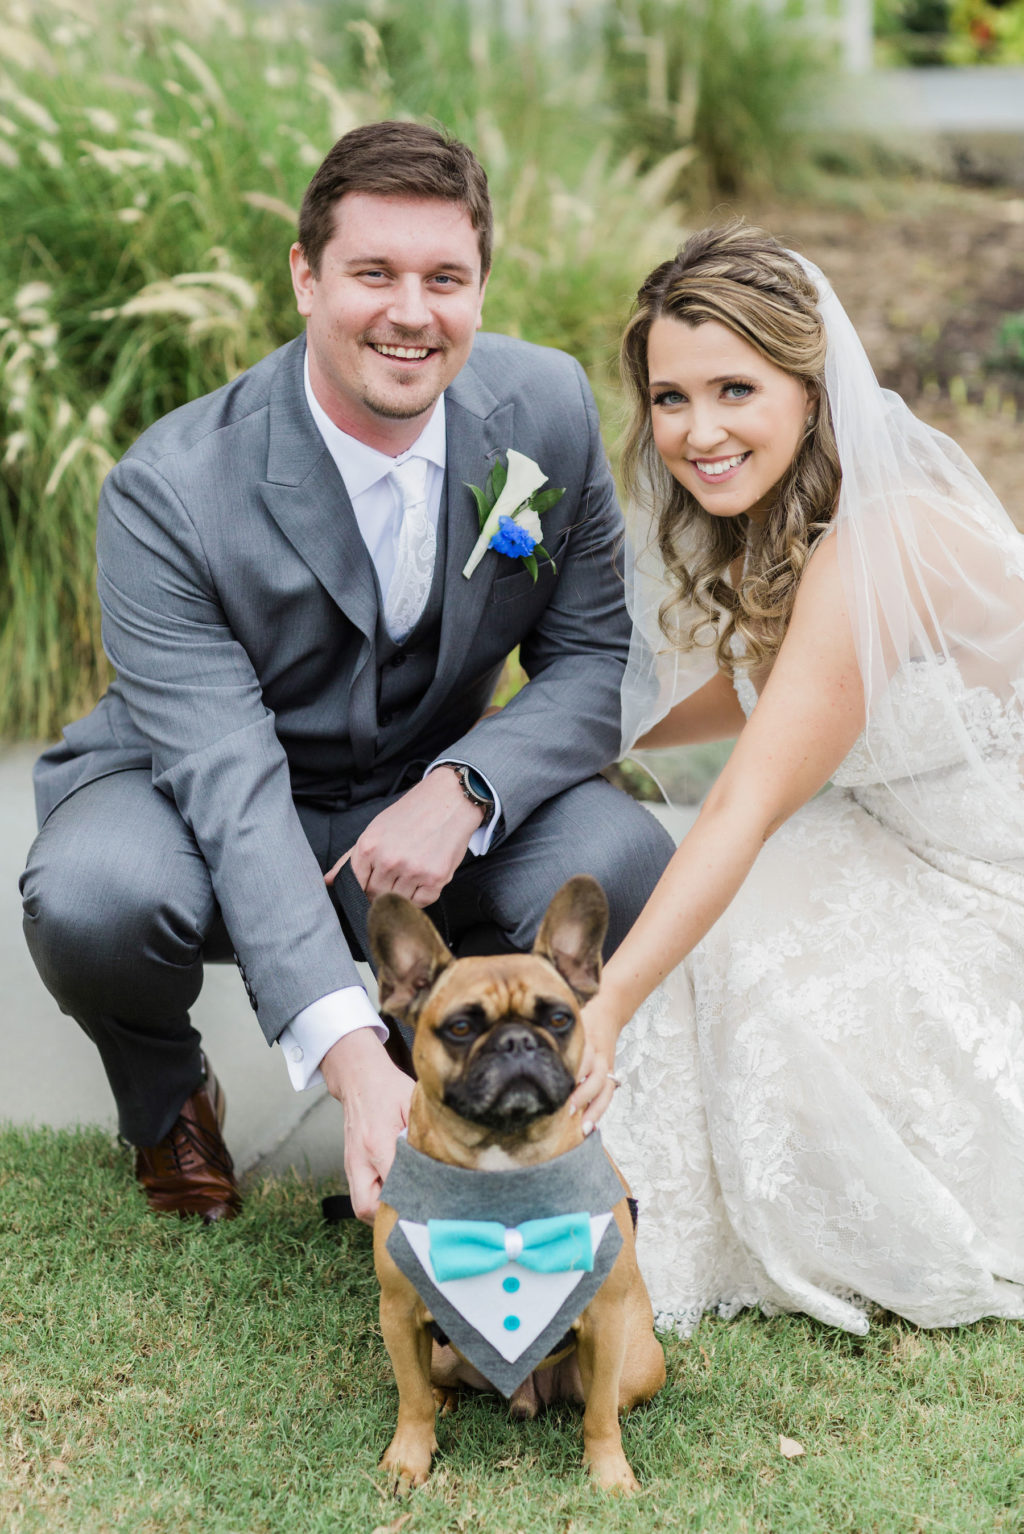 Bride and Groom Wedding Portraits with Pet Dog | Wedding Dog of Honor | Dog Wedding Bandana Bow Tie | Wedding Dog of Honor | Dog Bandana Bow Tie | Tampa Bay Pet Planner Fairytail Pet Care